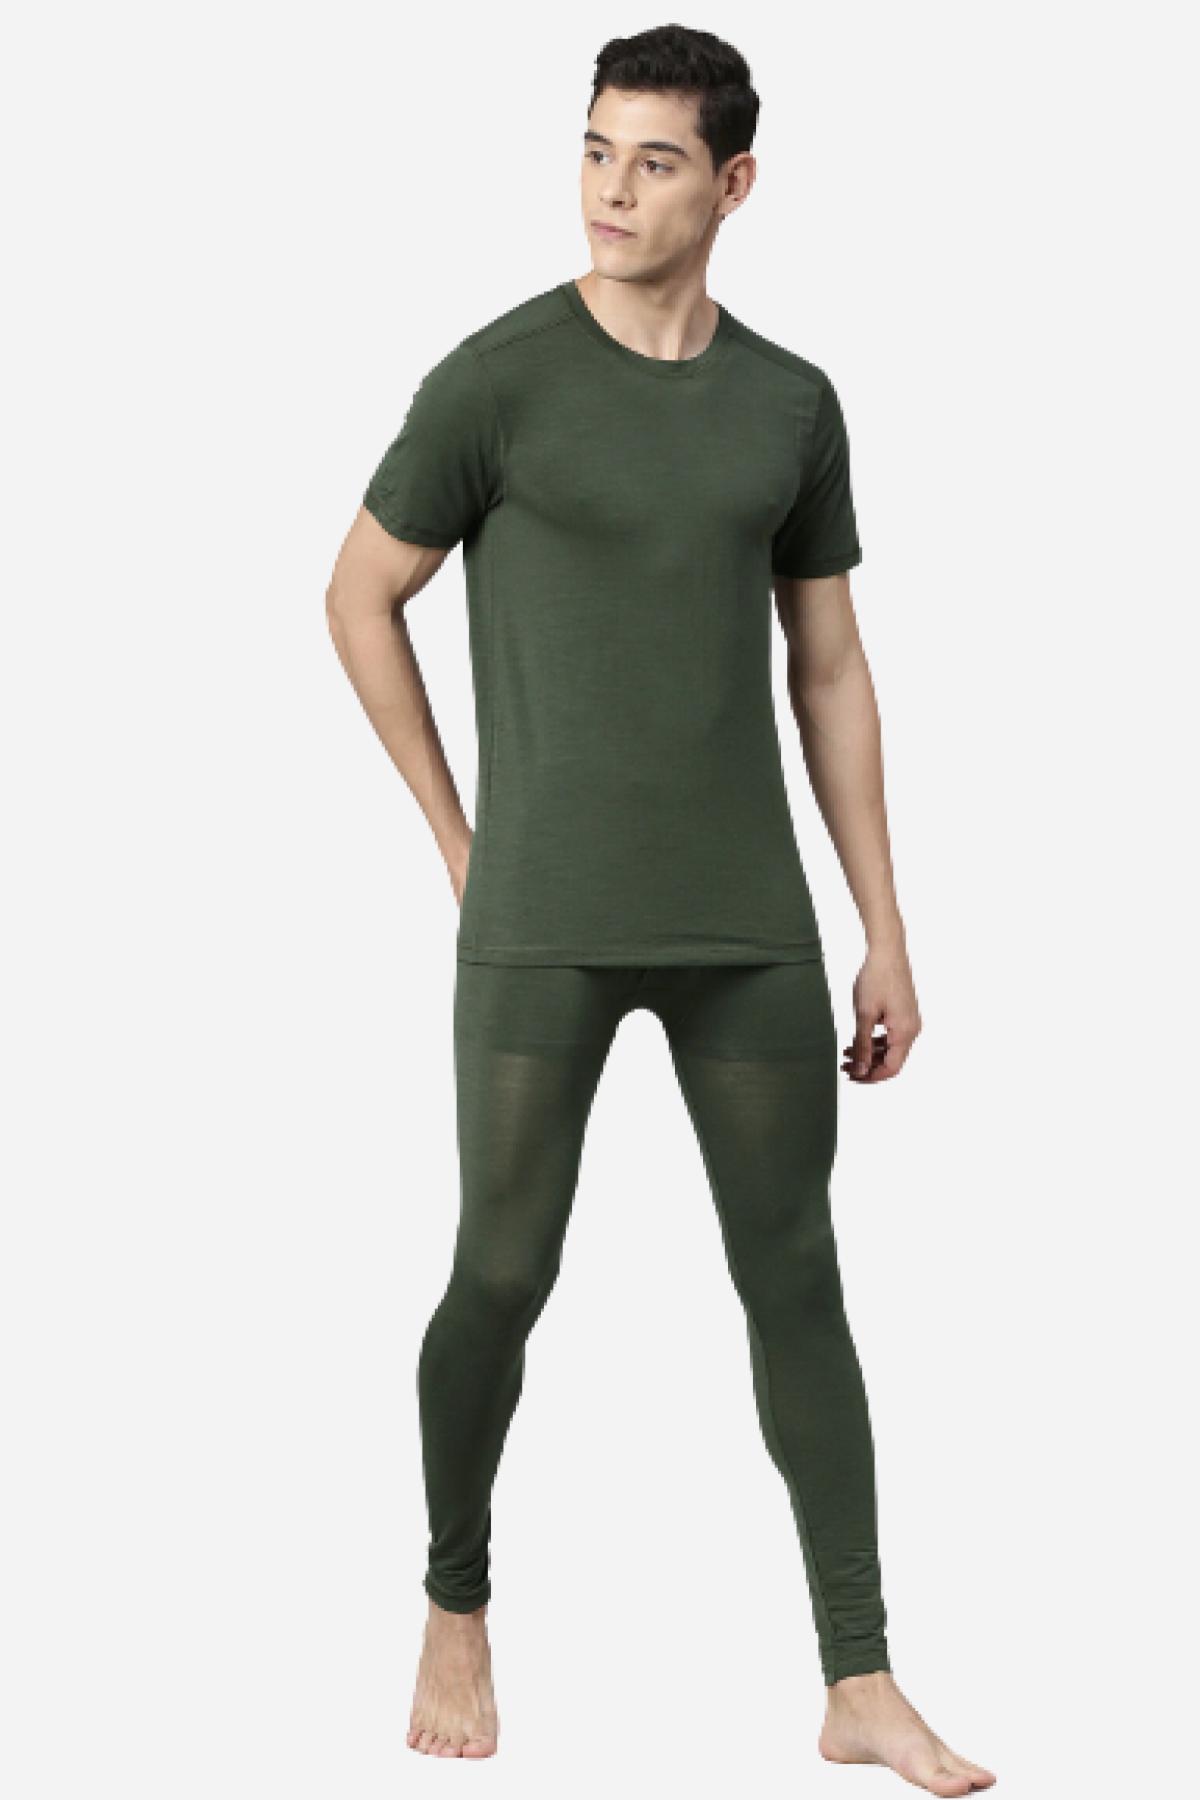 Green Apple Active | Organic Bamboo Active & Yoga Clothing